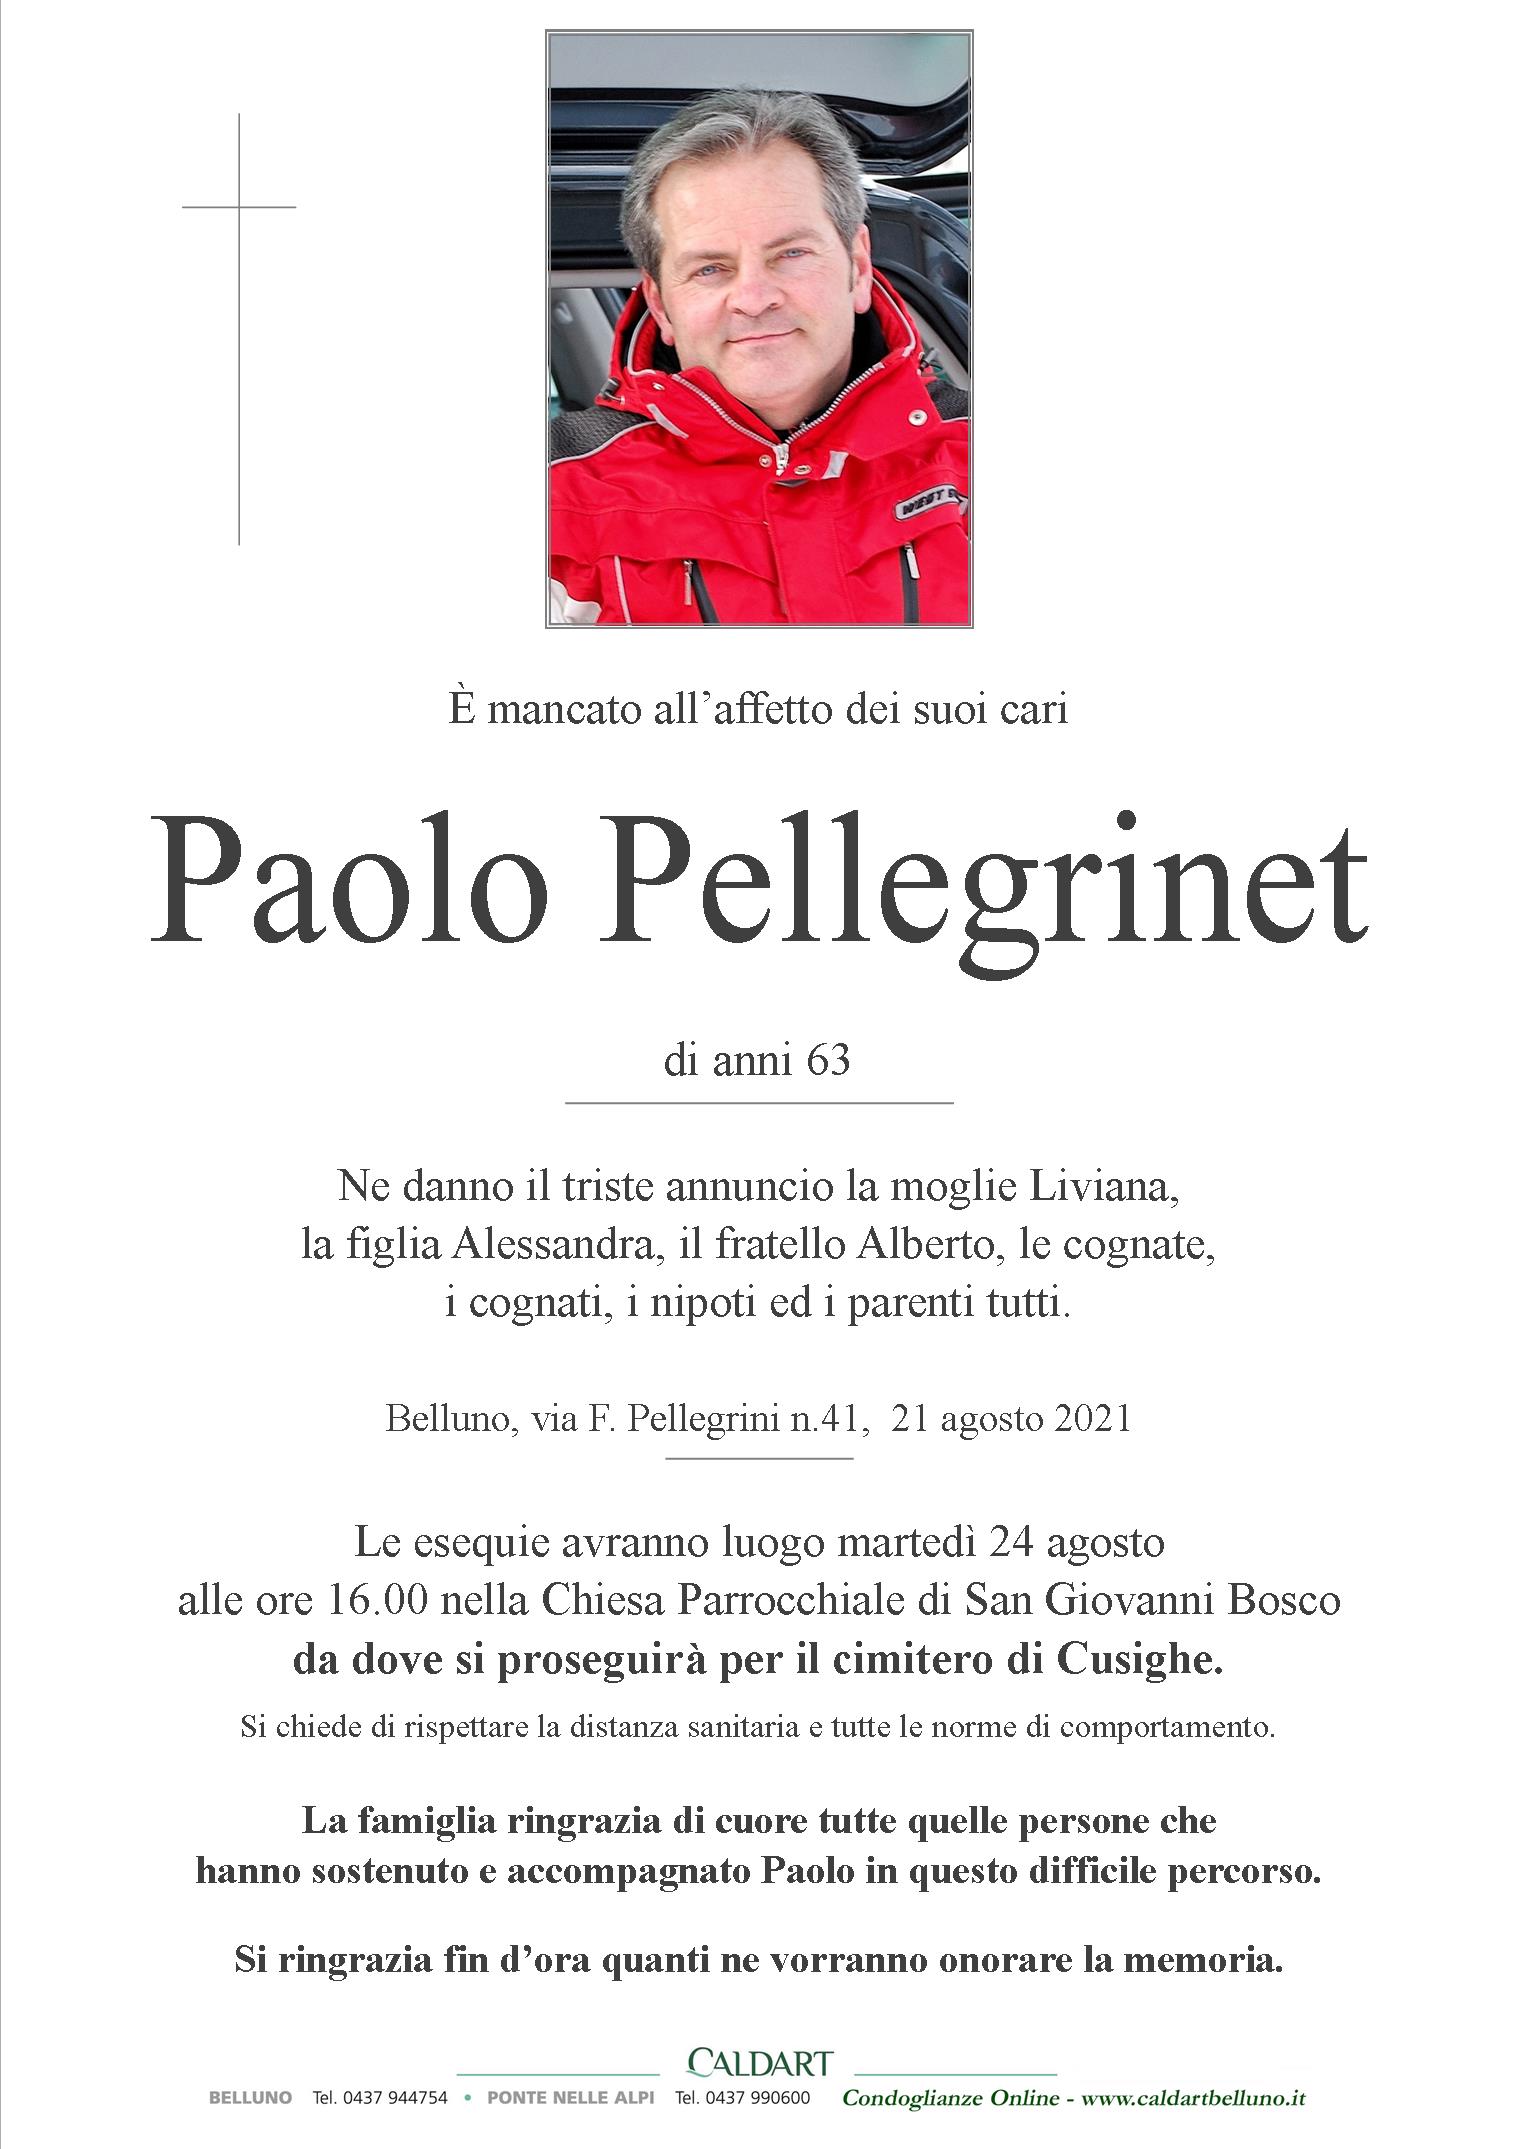 Pellegrinet Paolo